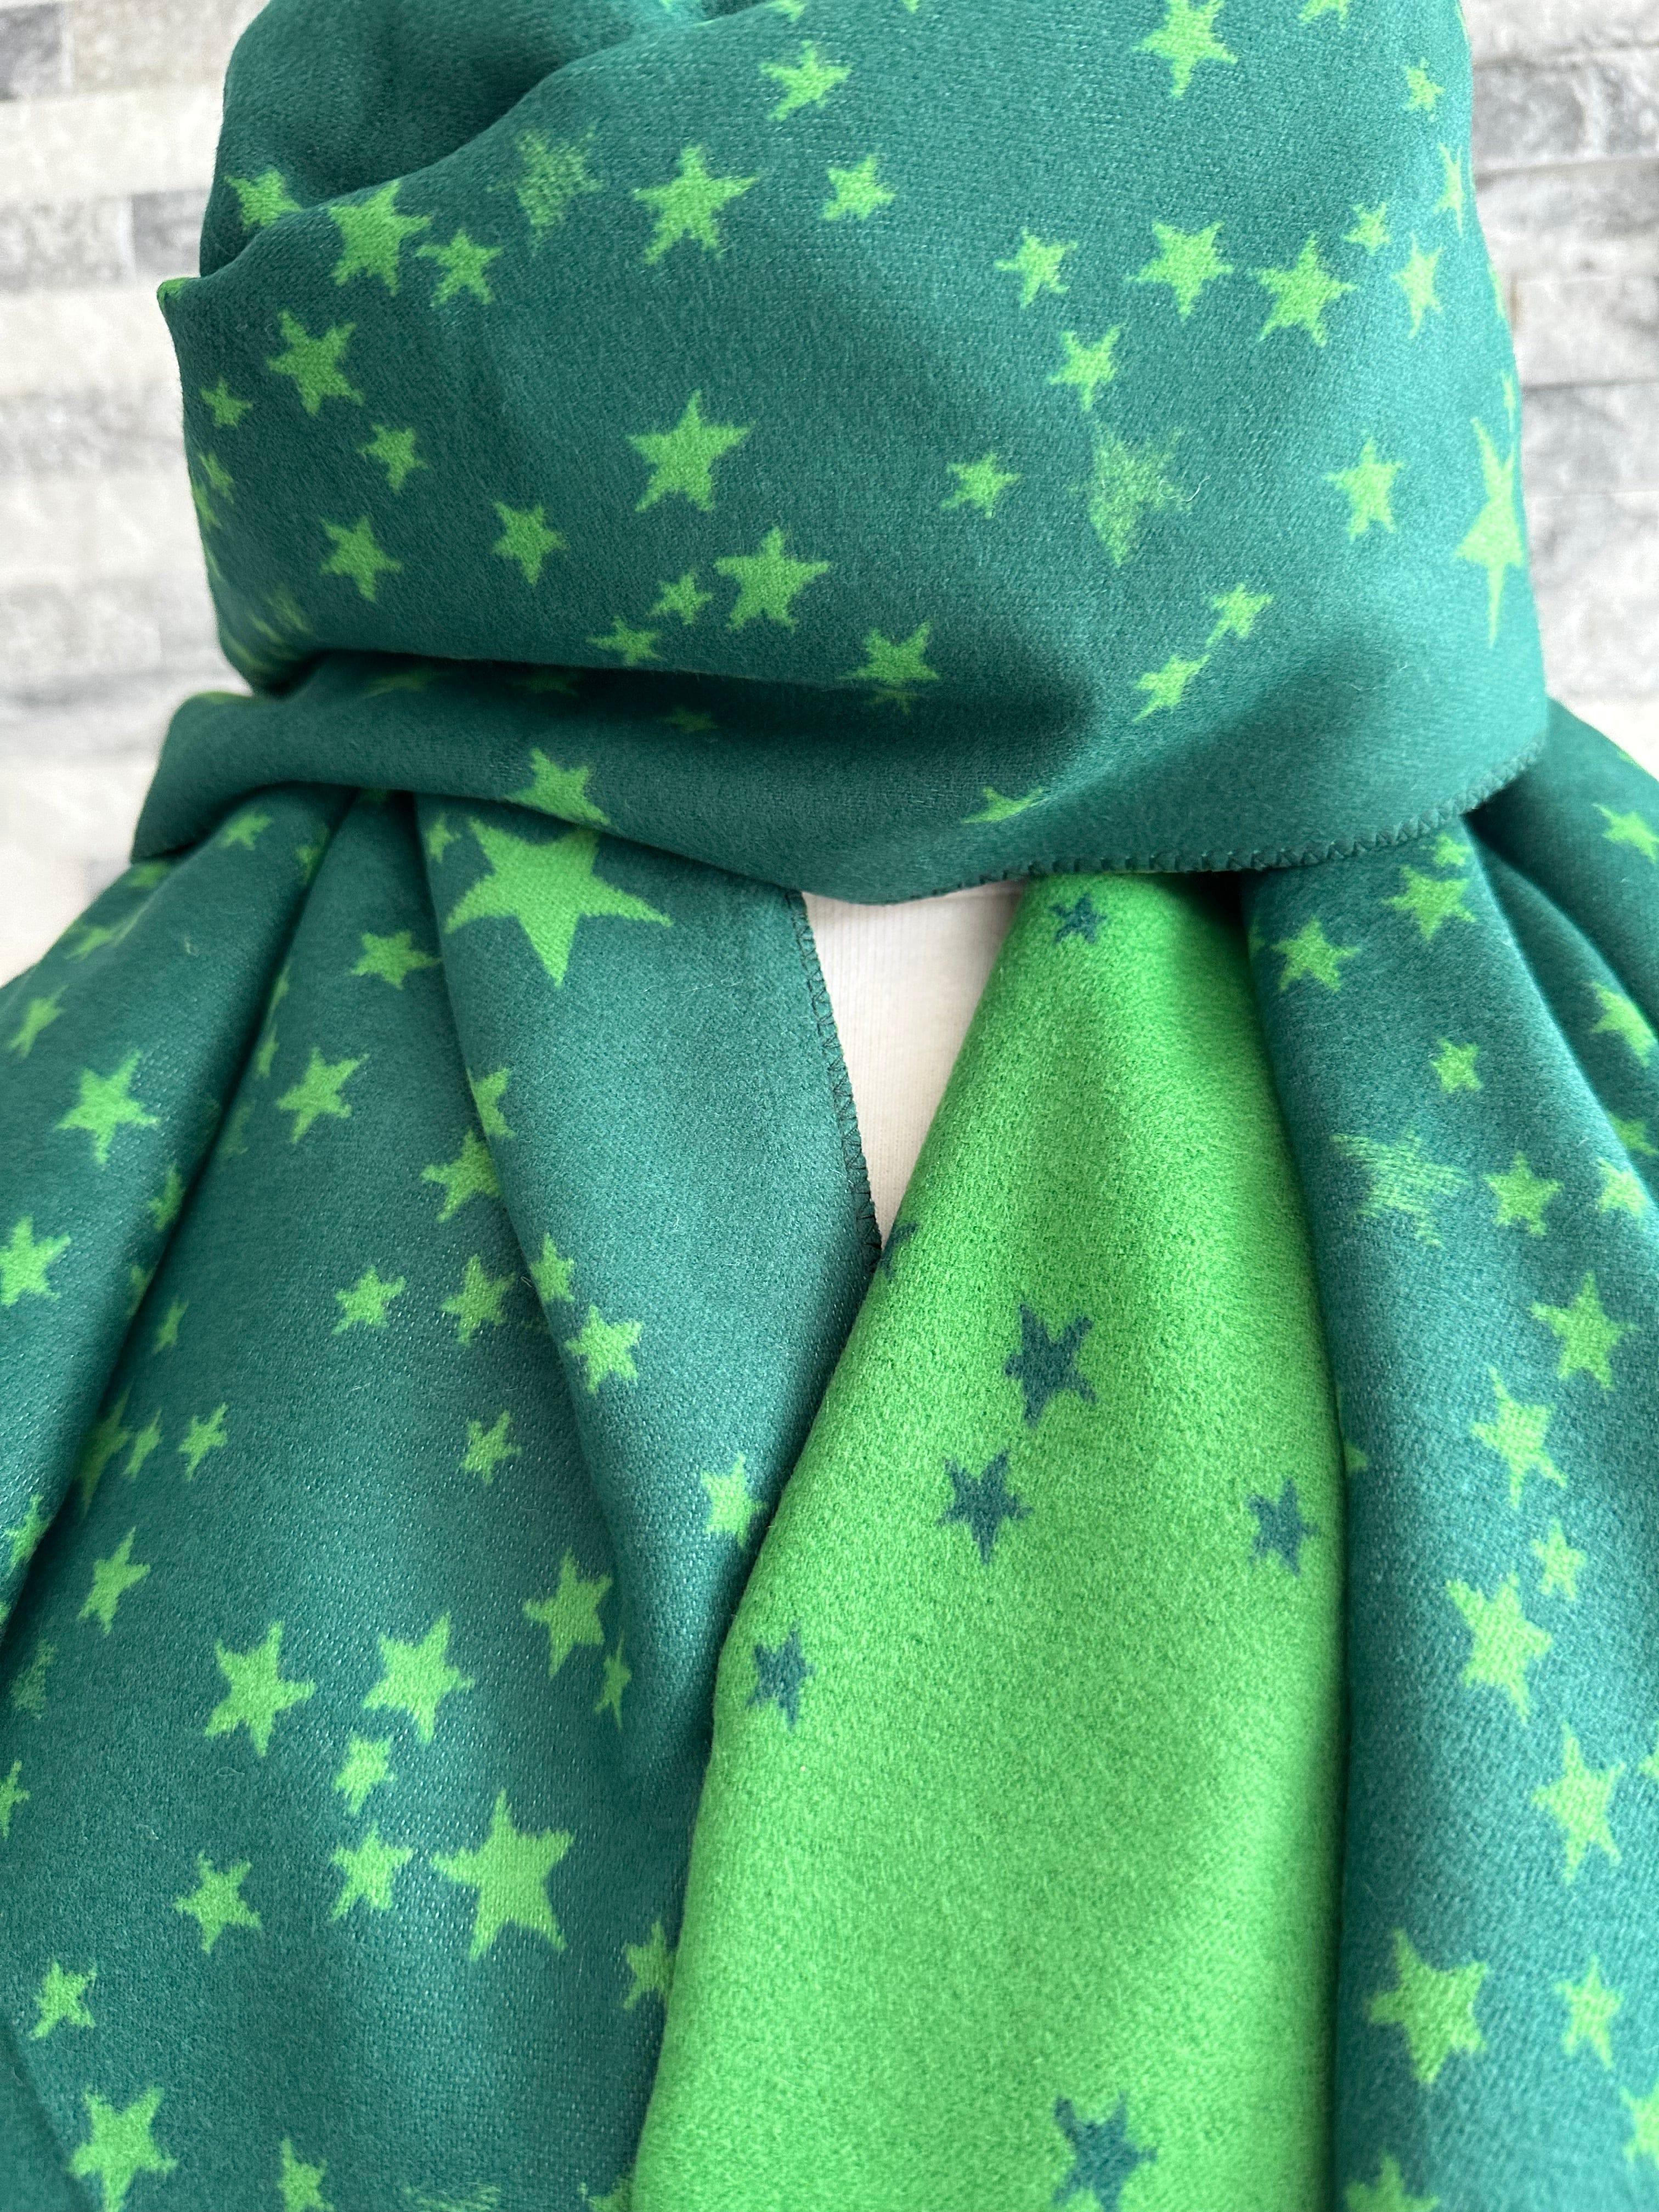 lusciousscarves Reversible Green Stars Scarf / Wrap